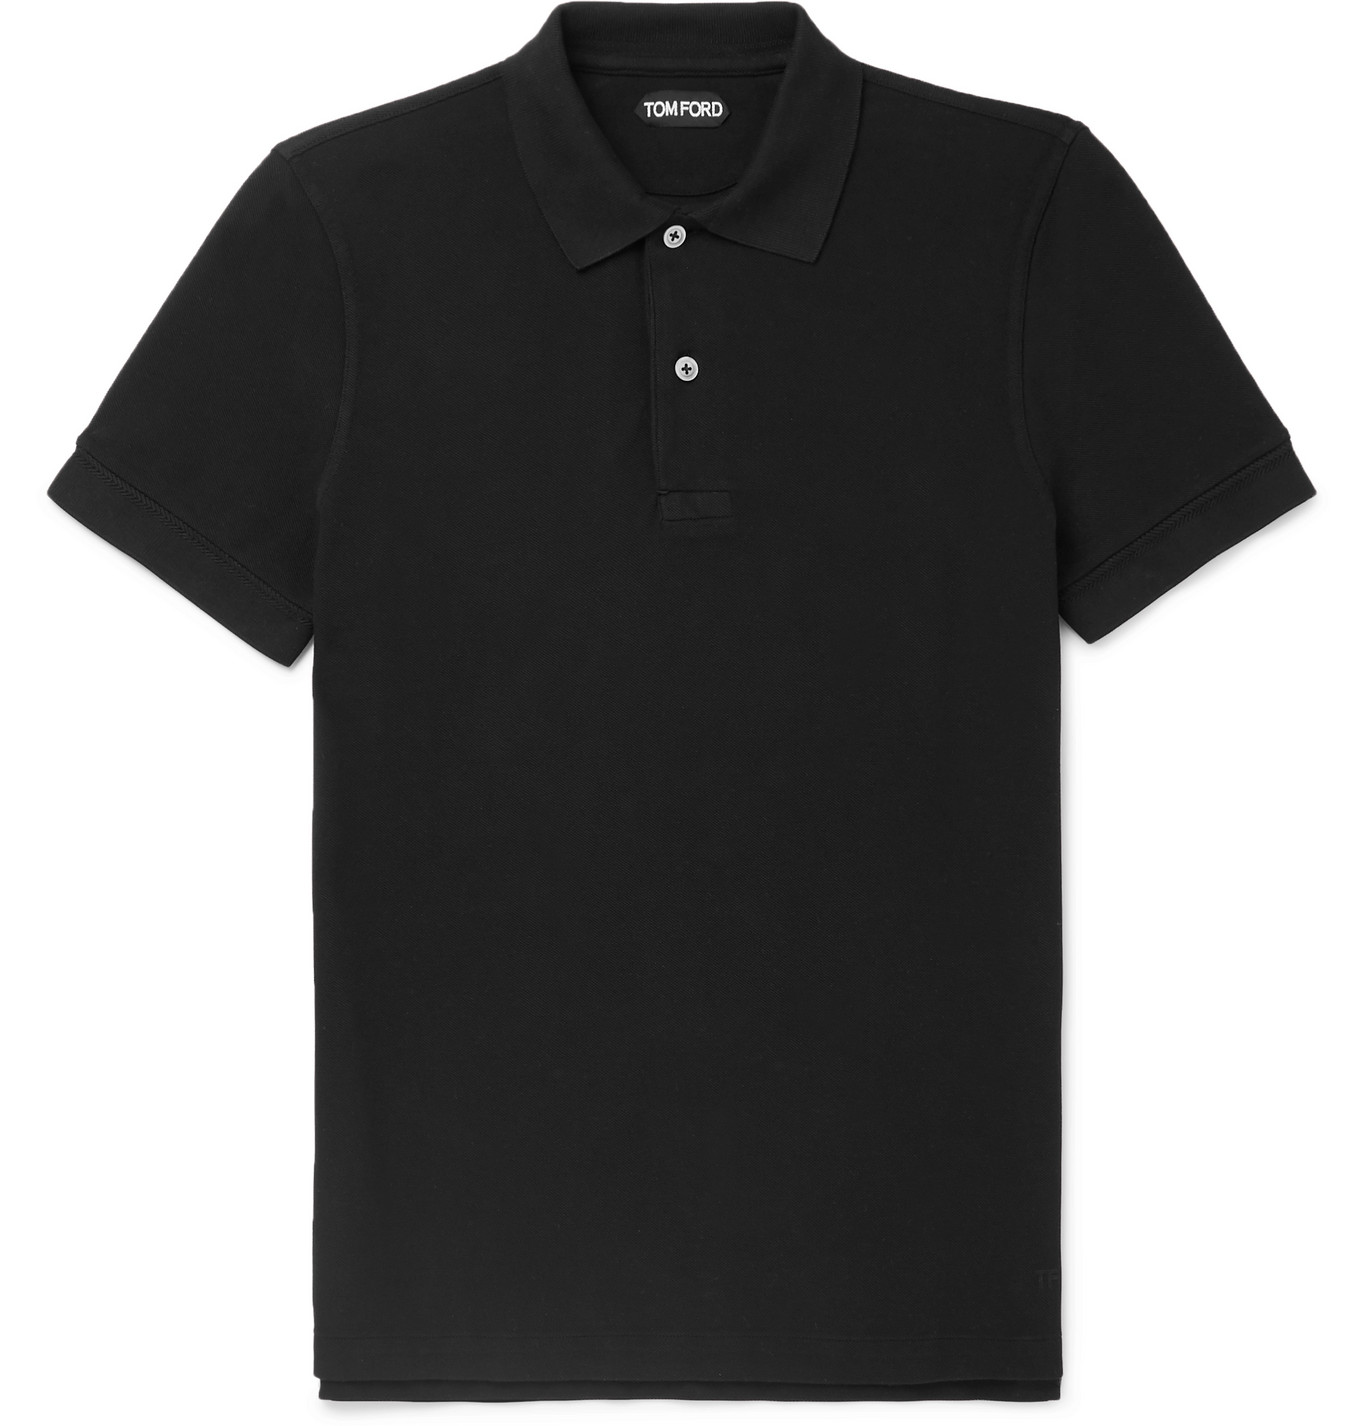 TOM FORD - Slim-Fit Cotton-Piqué Polo Shirt - Men - Black | The Fashionisto